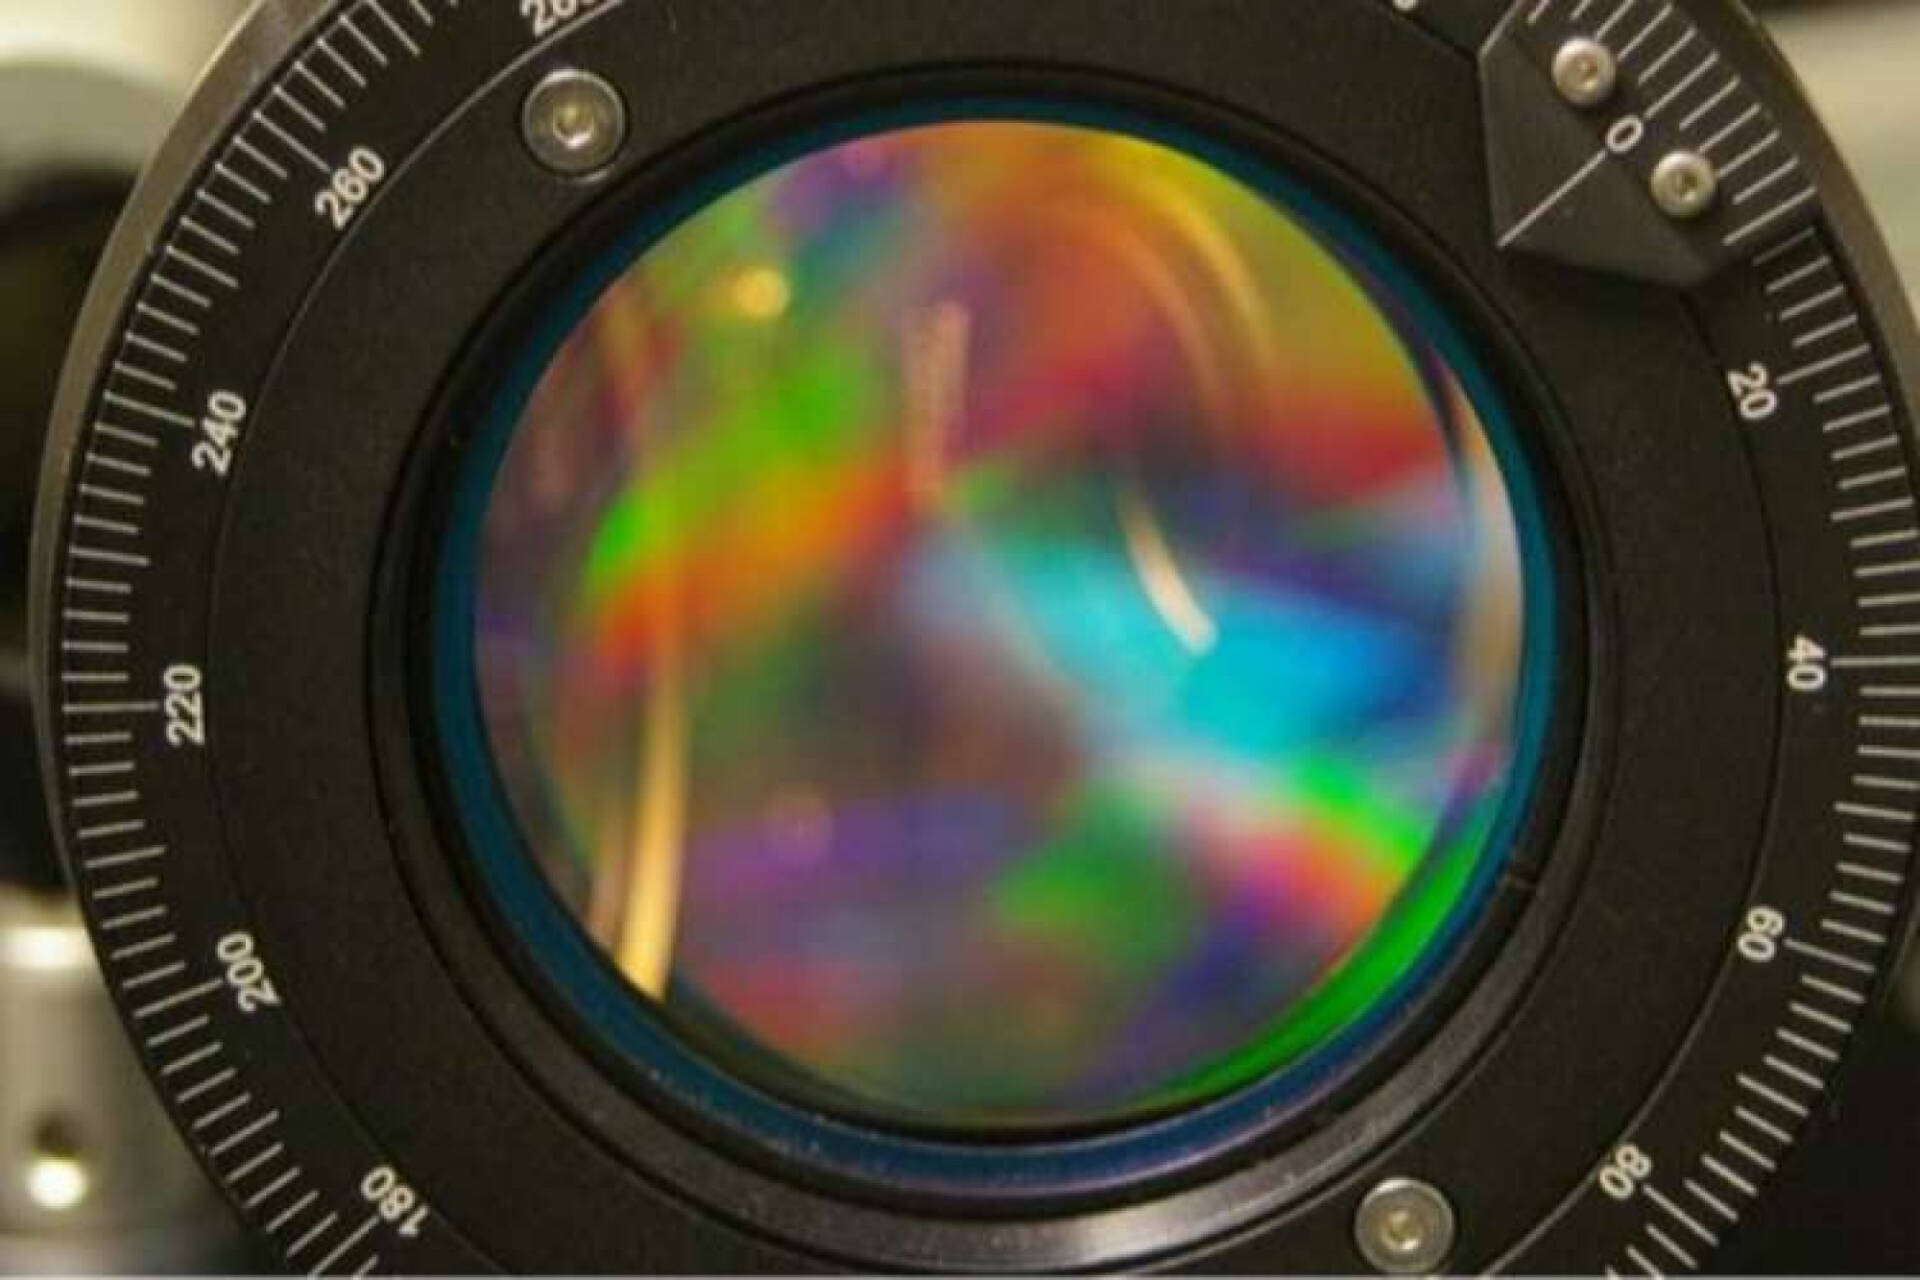 The lense of a camera